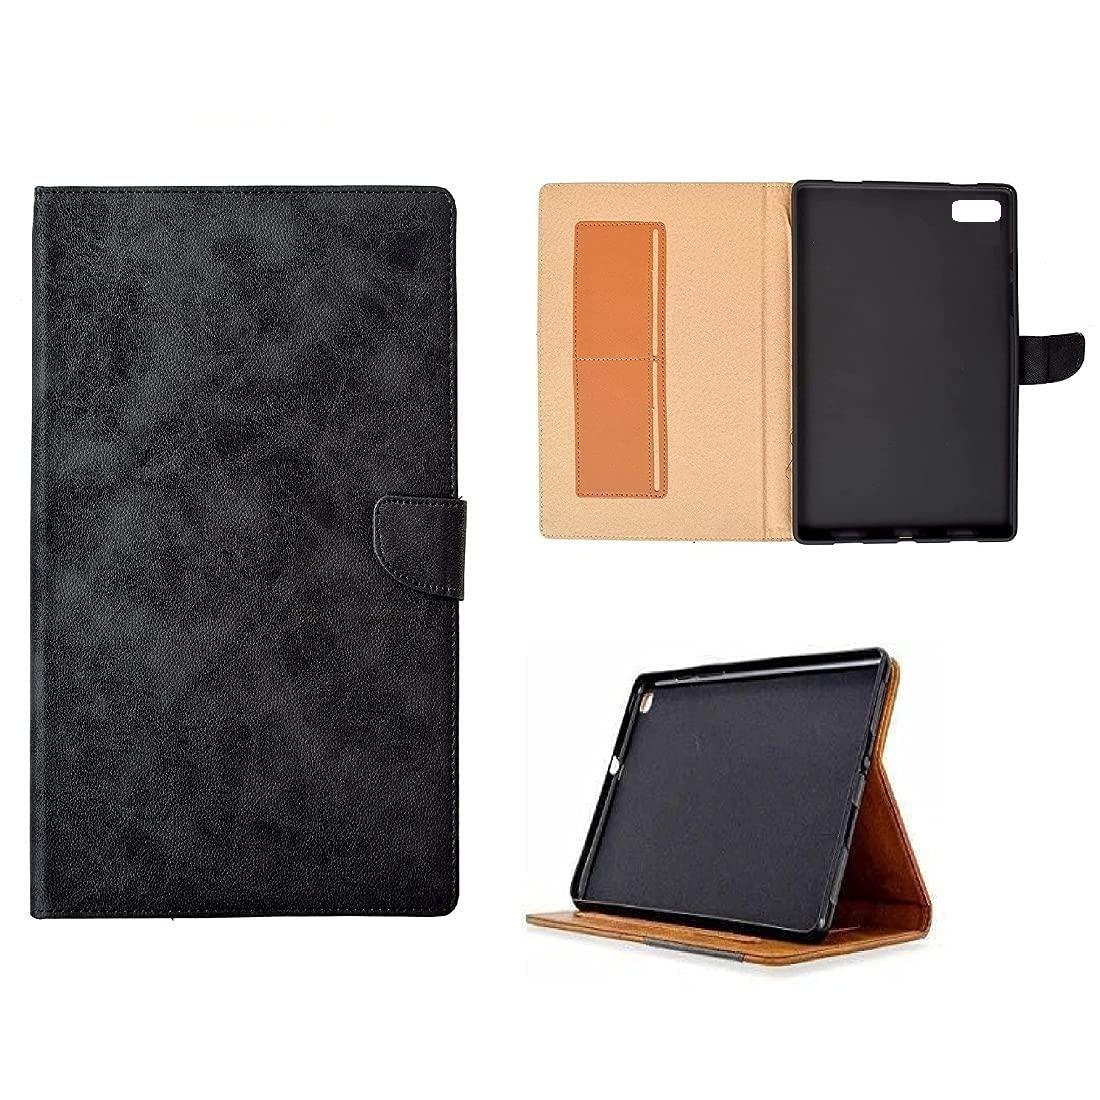 ValueActive Leather Flip Case Cover for Apple iPad Mini 2 / 3 - ValueActive